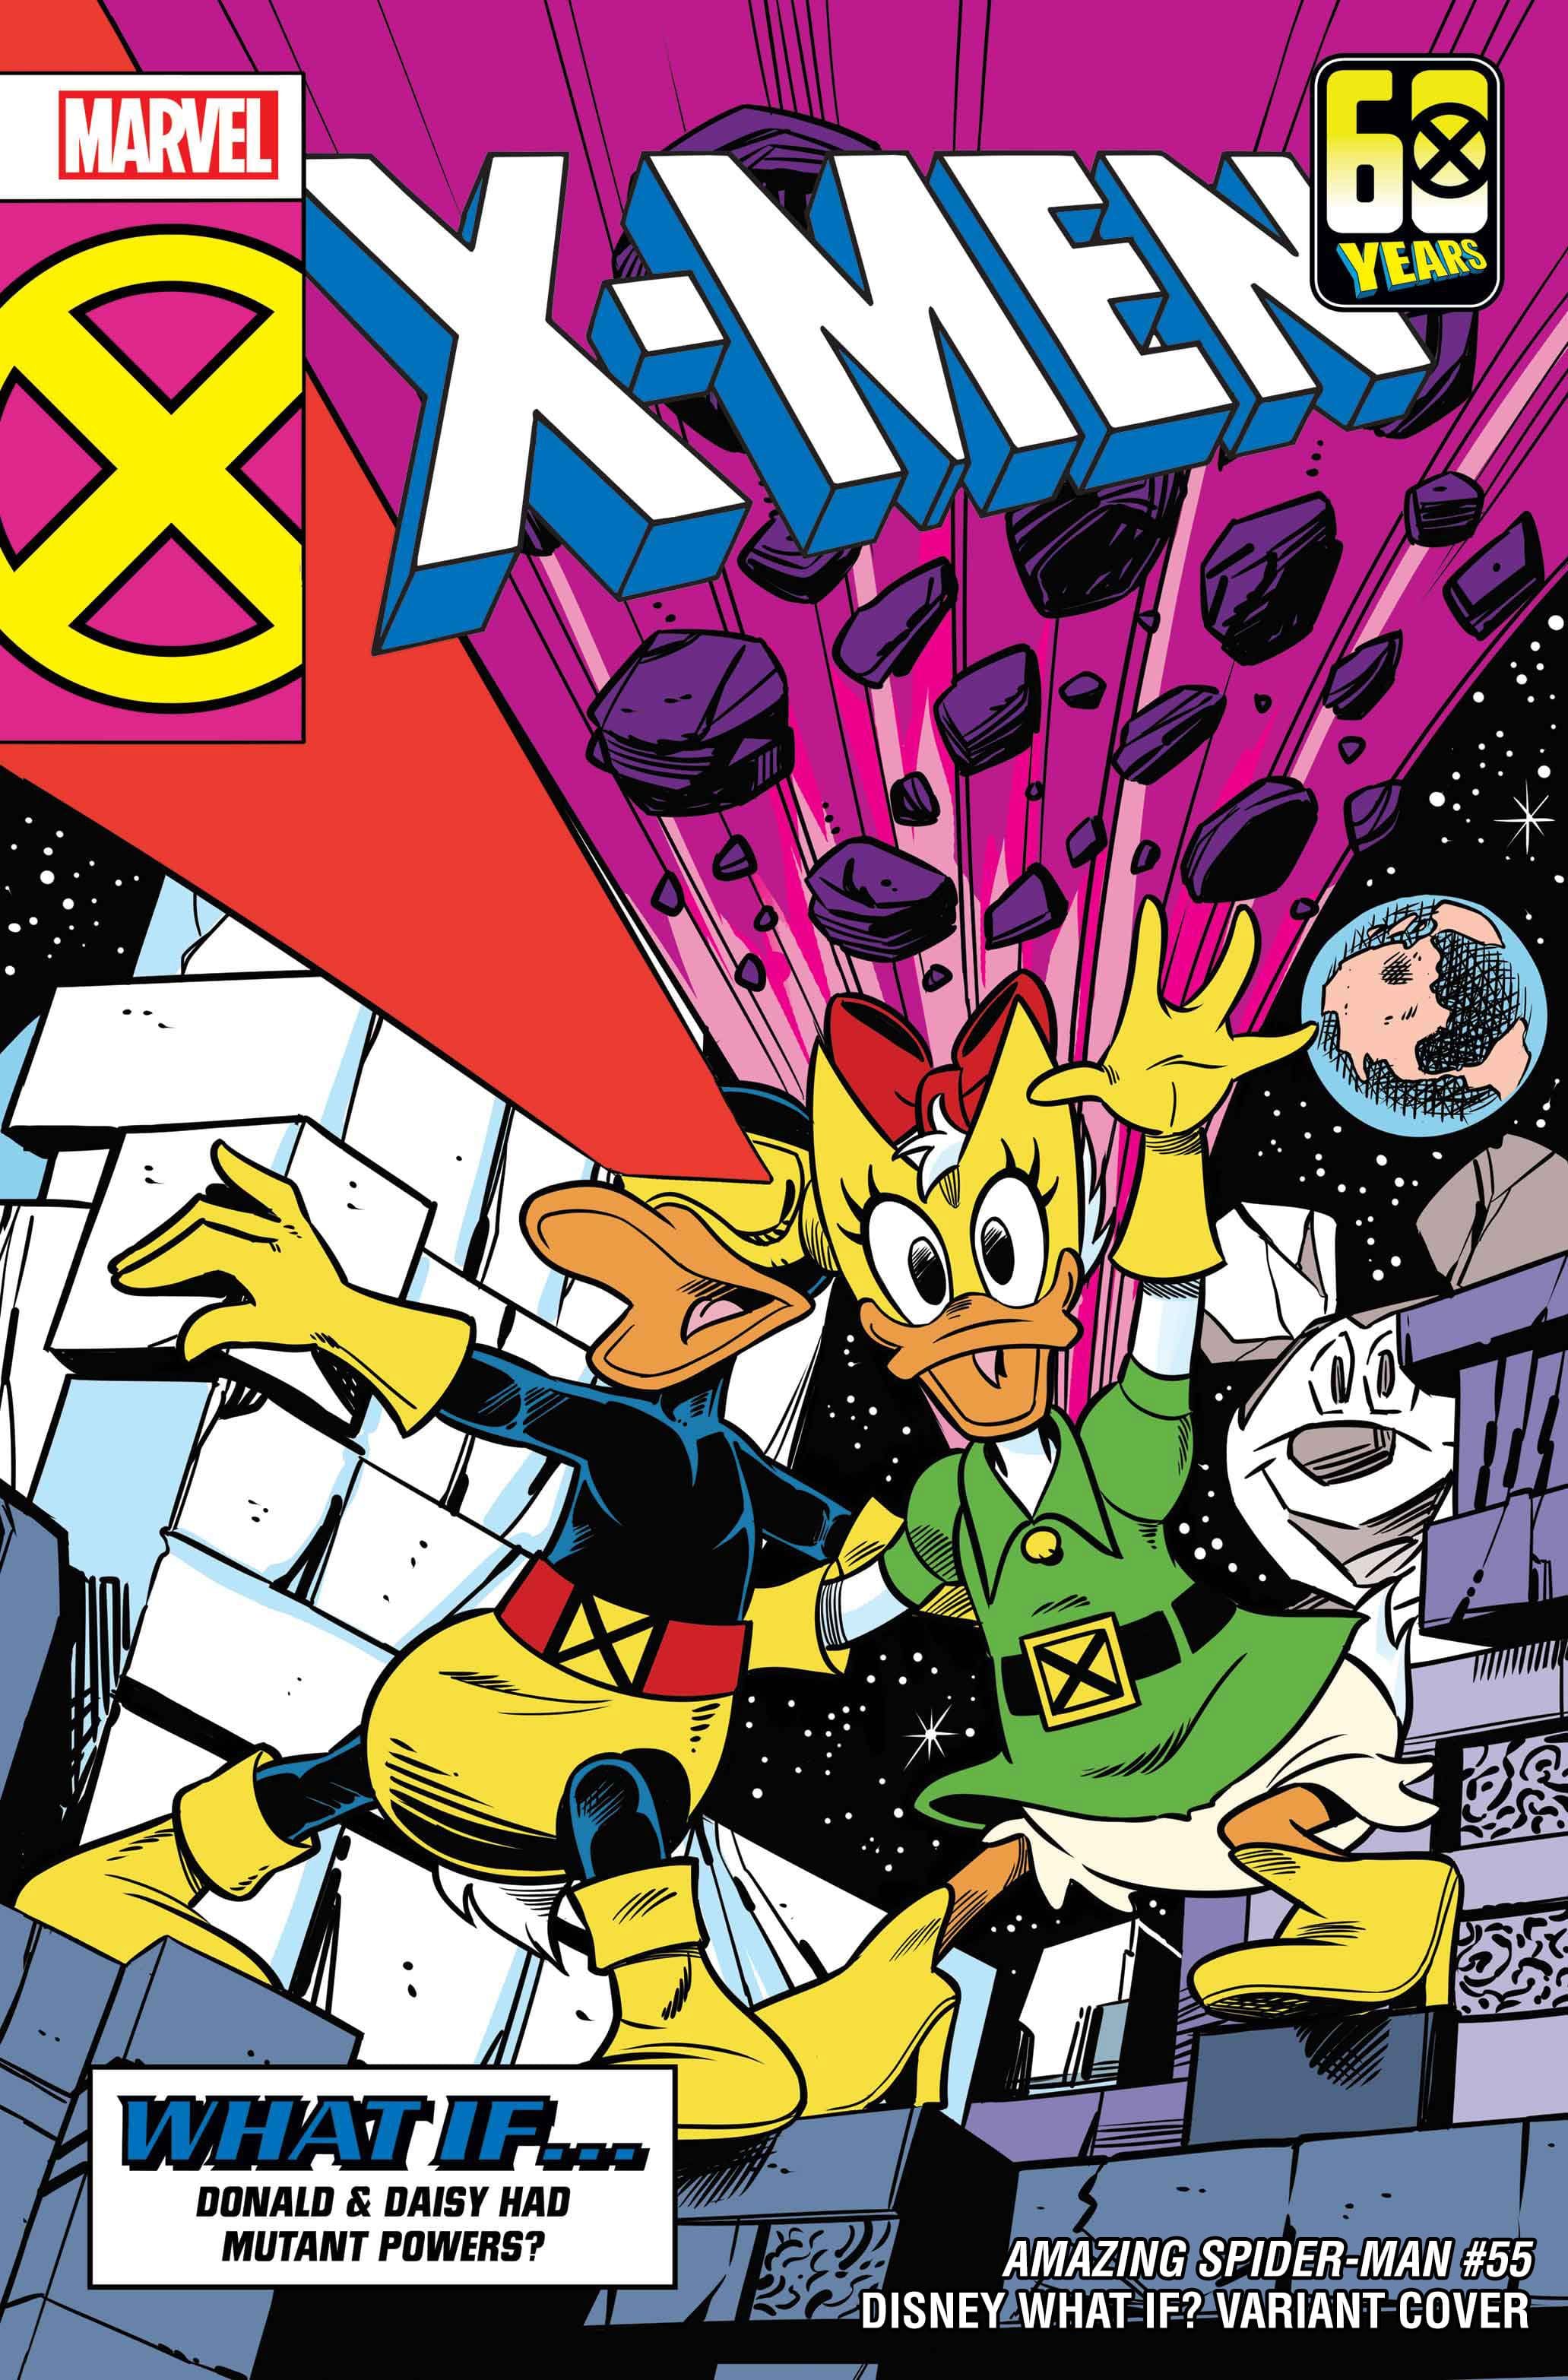 X-Men’s Iconic Jean Grey & Cyclops Romance Reimagined as Daisy & Donald Duck